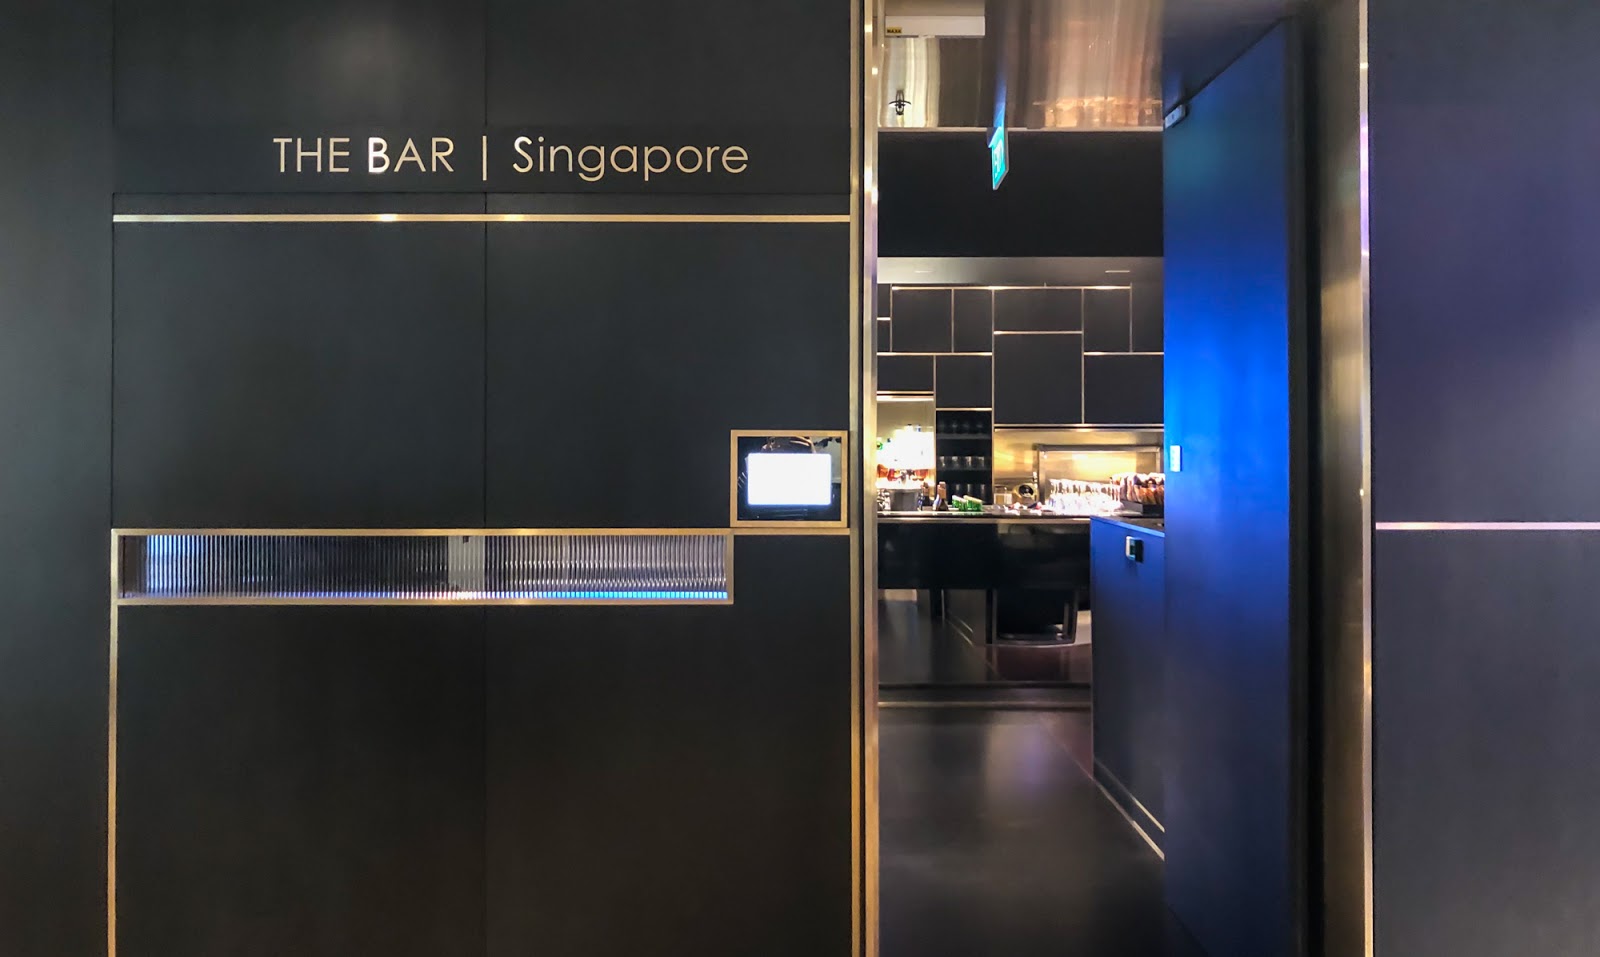 British Airways Singapore Lounge The Bar